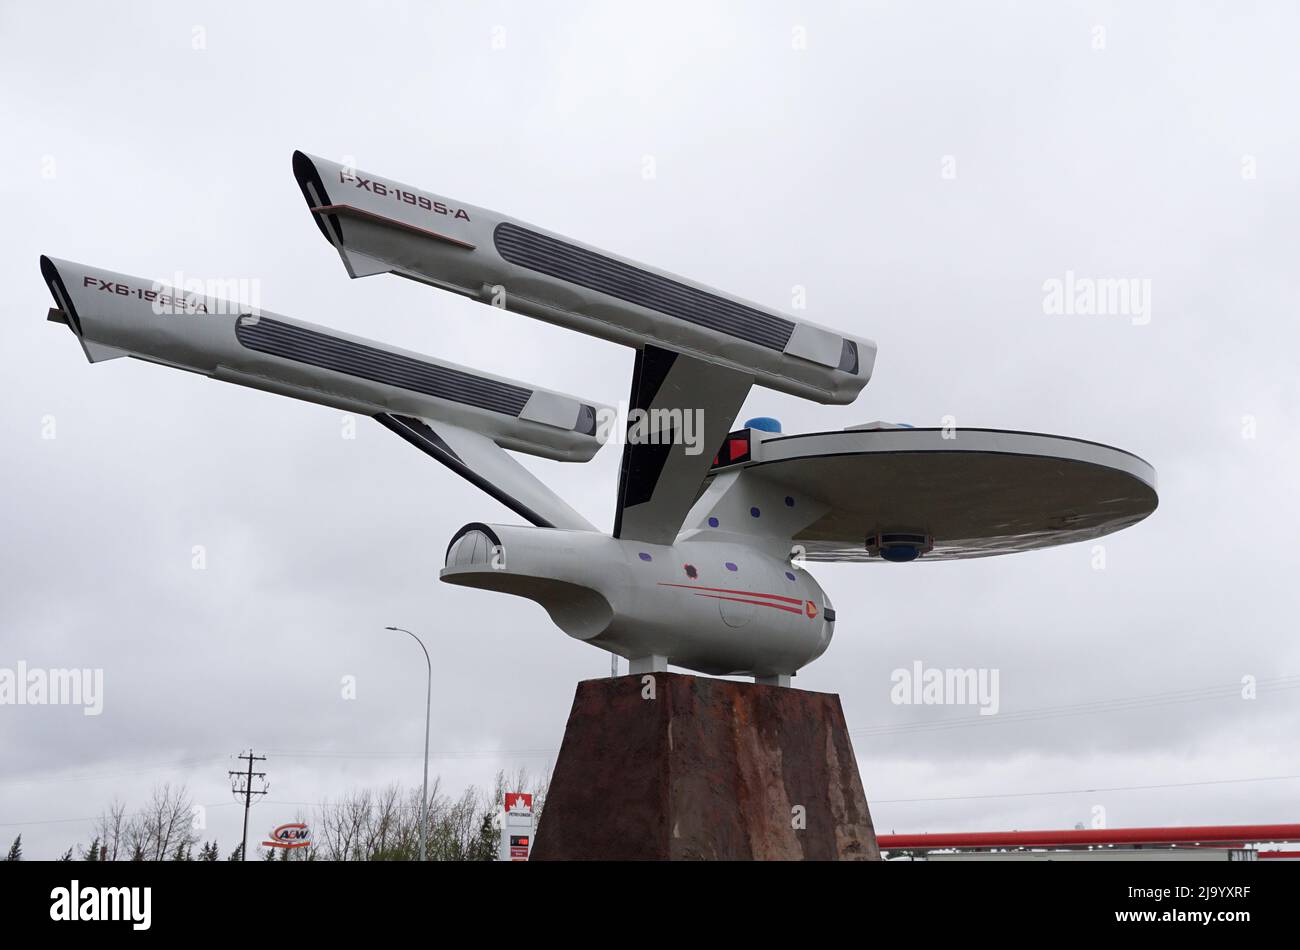 Model of the Starship Enterprise, Vulcan, Alberta Stock Photo